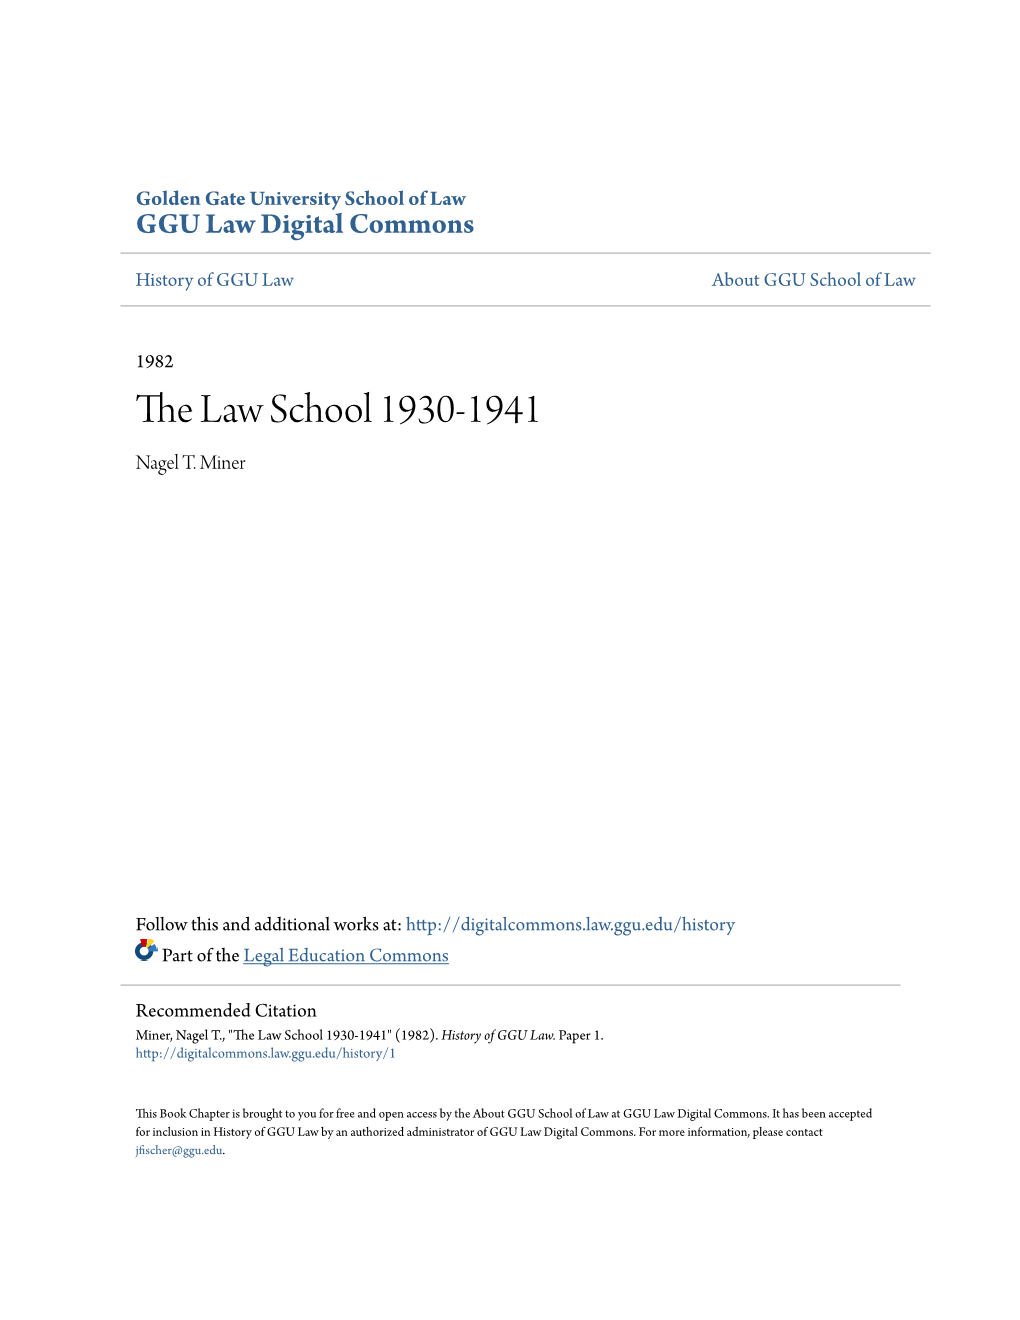 The Law School 1930-1941 Nagel T